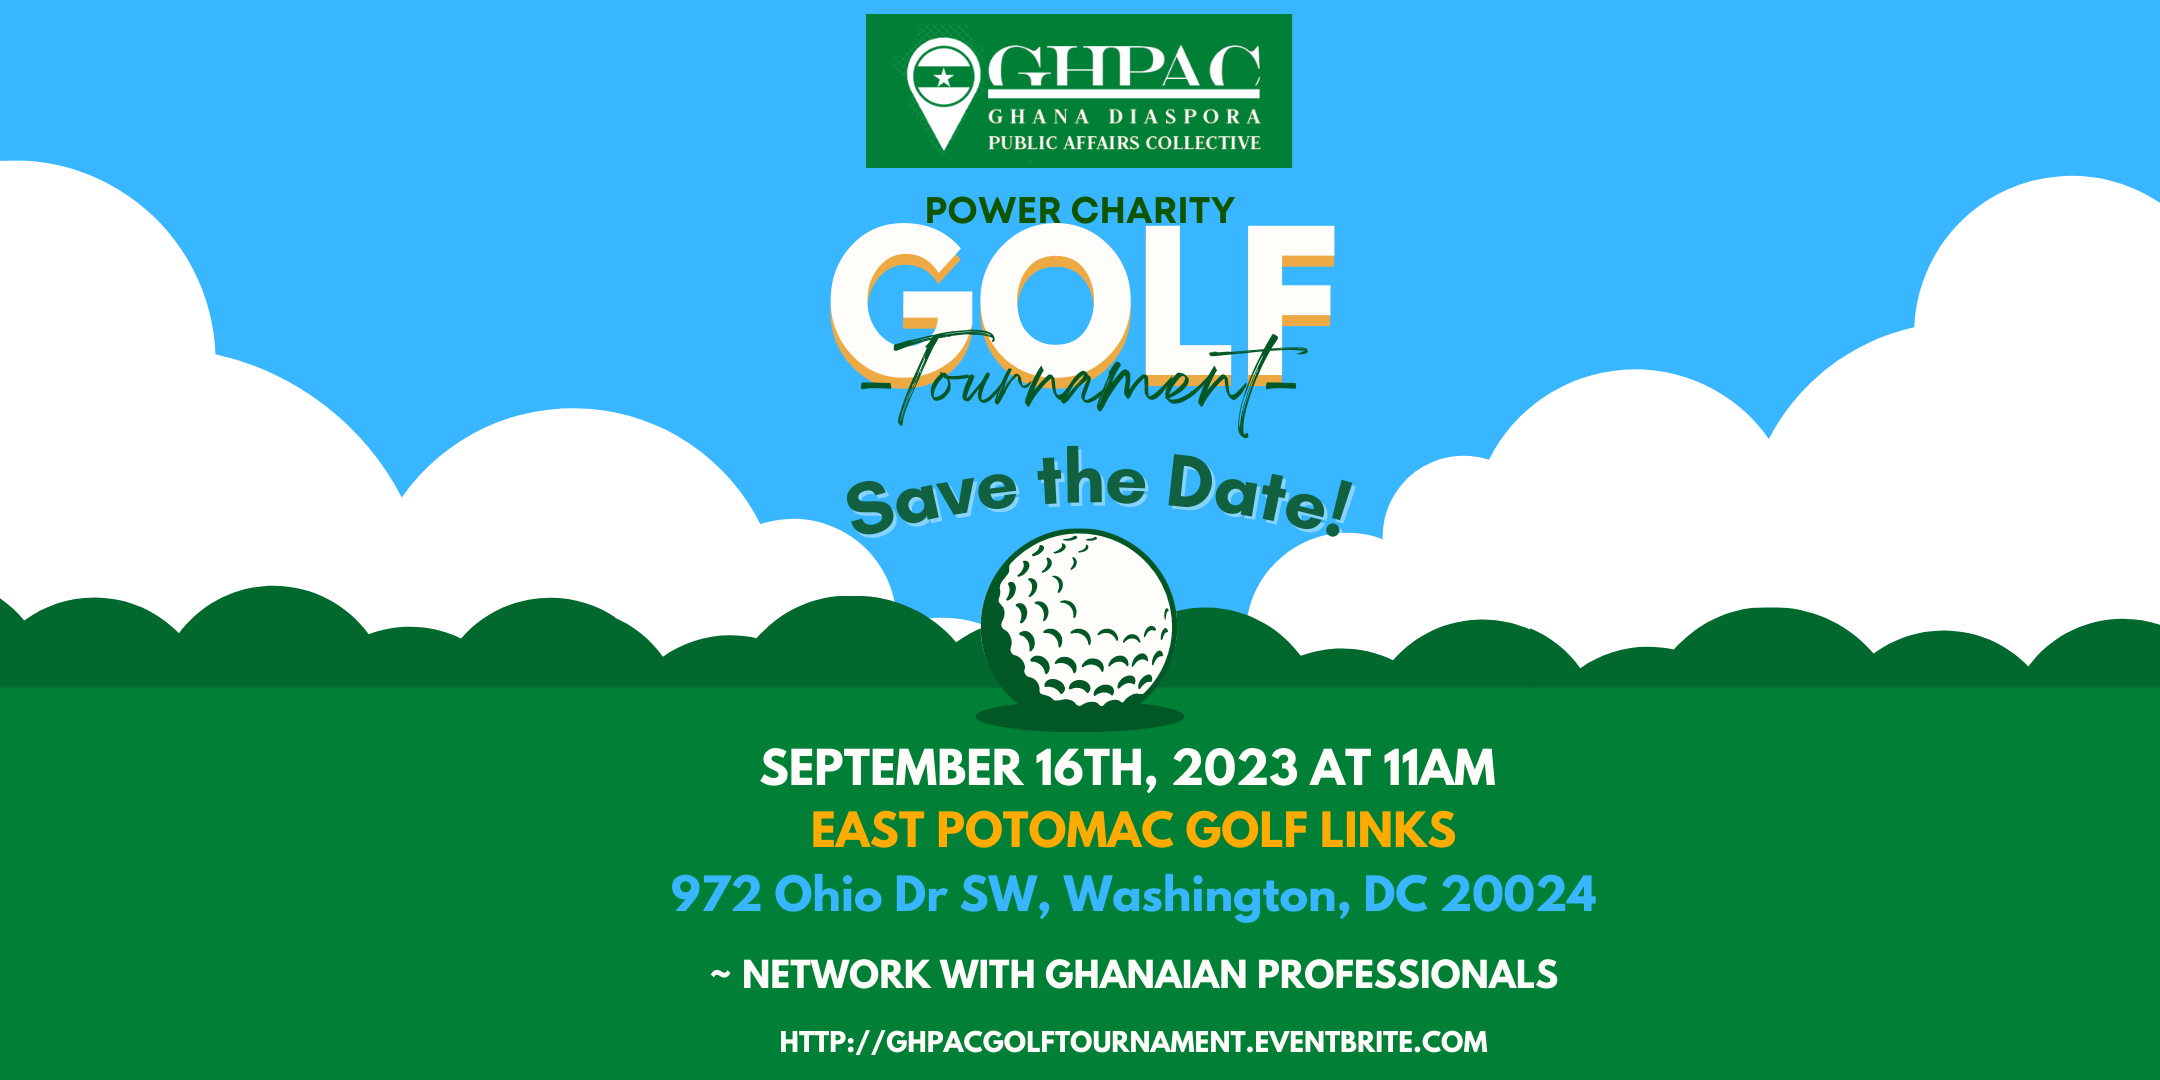 GHPAC Power Charity Golf Tournament